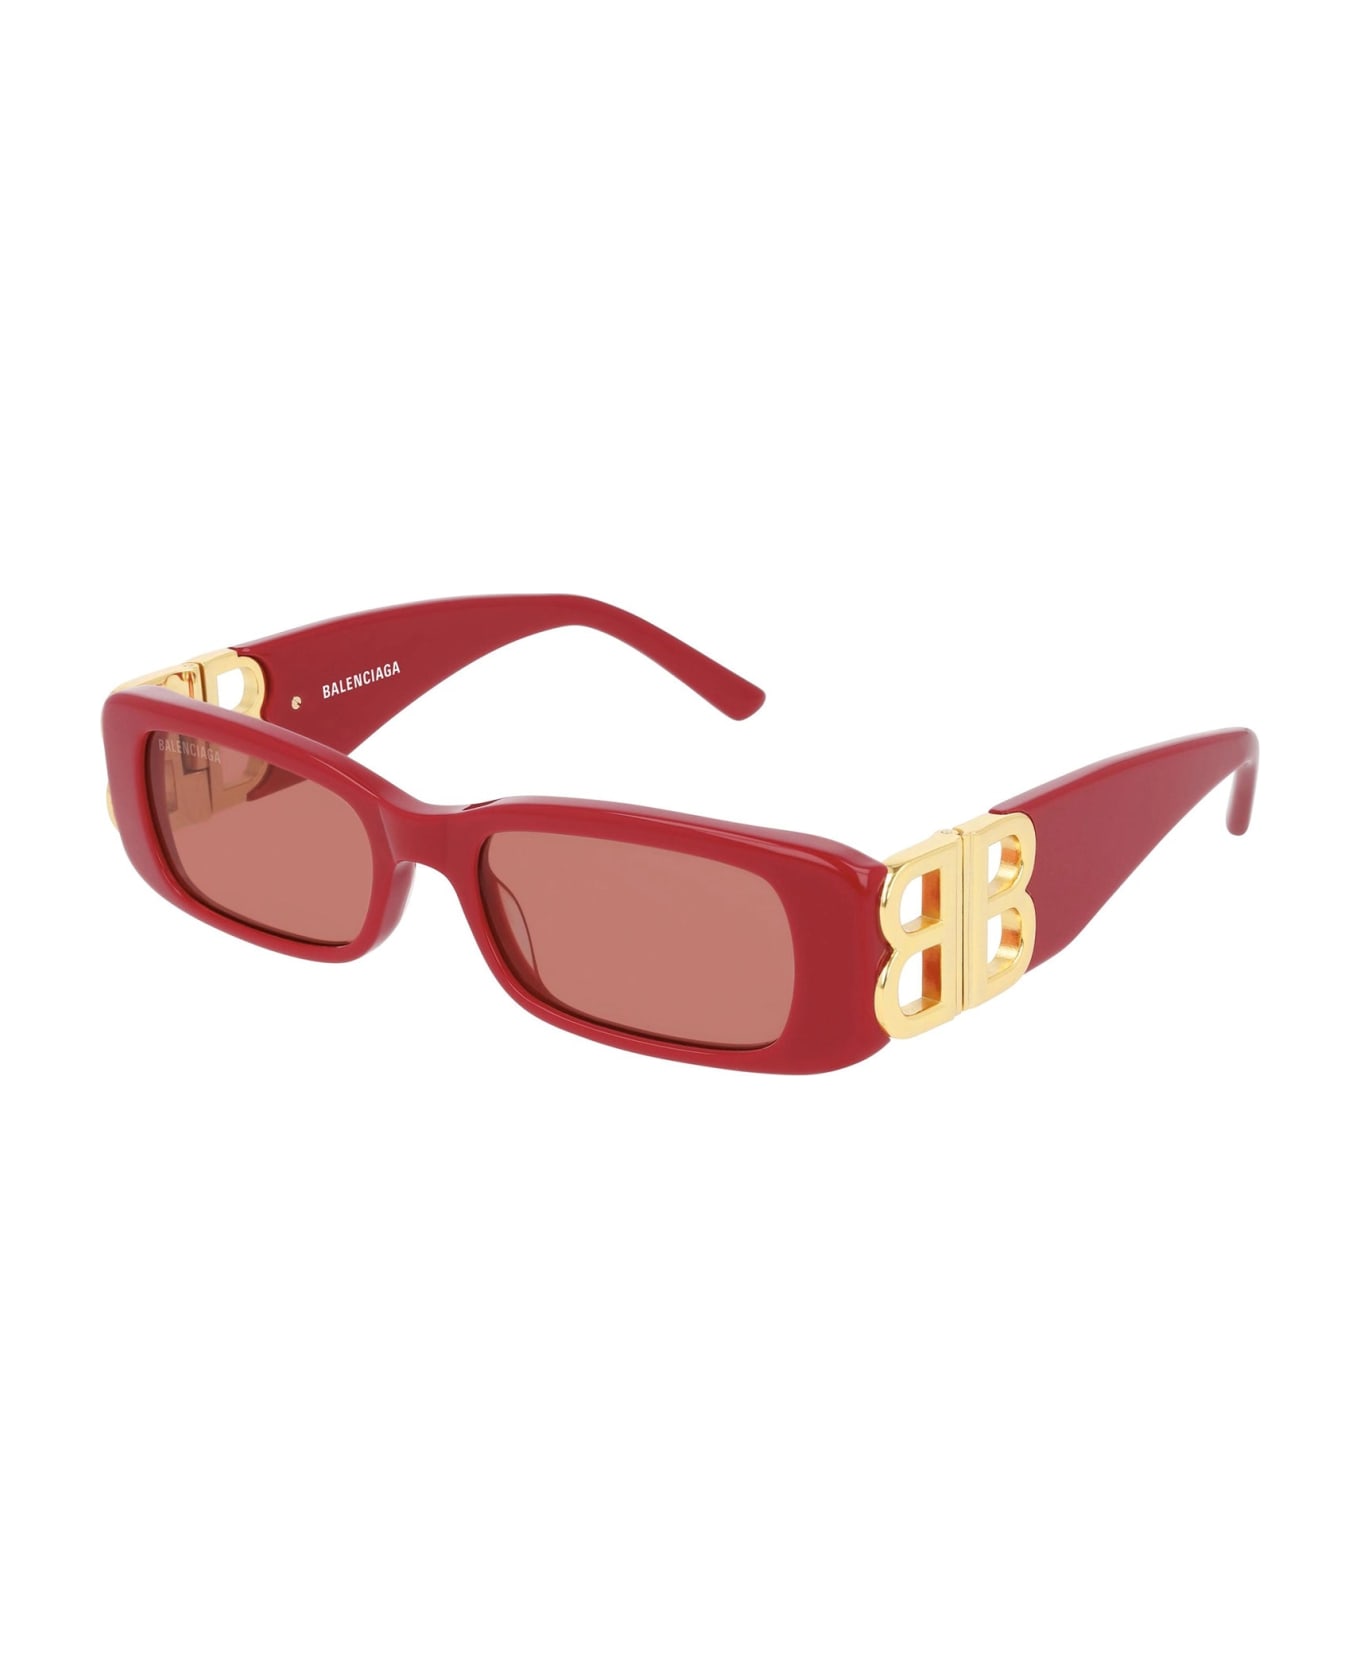 Balenciaga Eyewear Bb0096s Sunglasses - shiny solid red